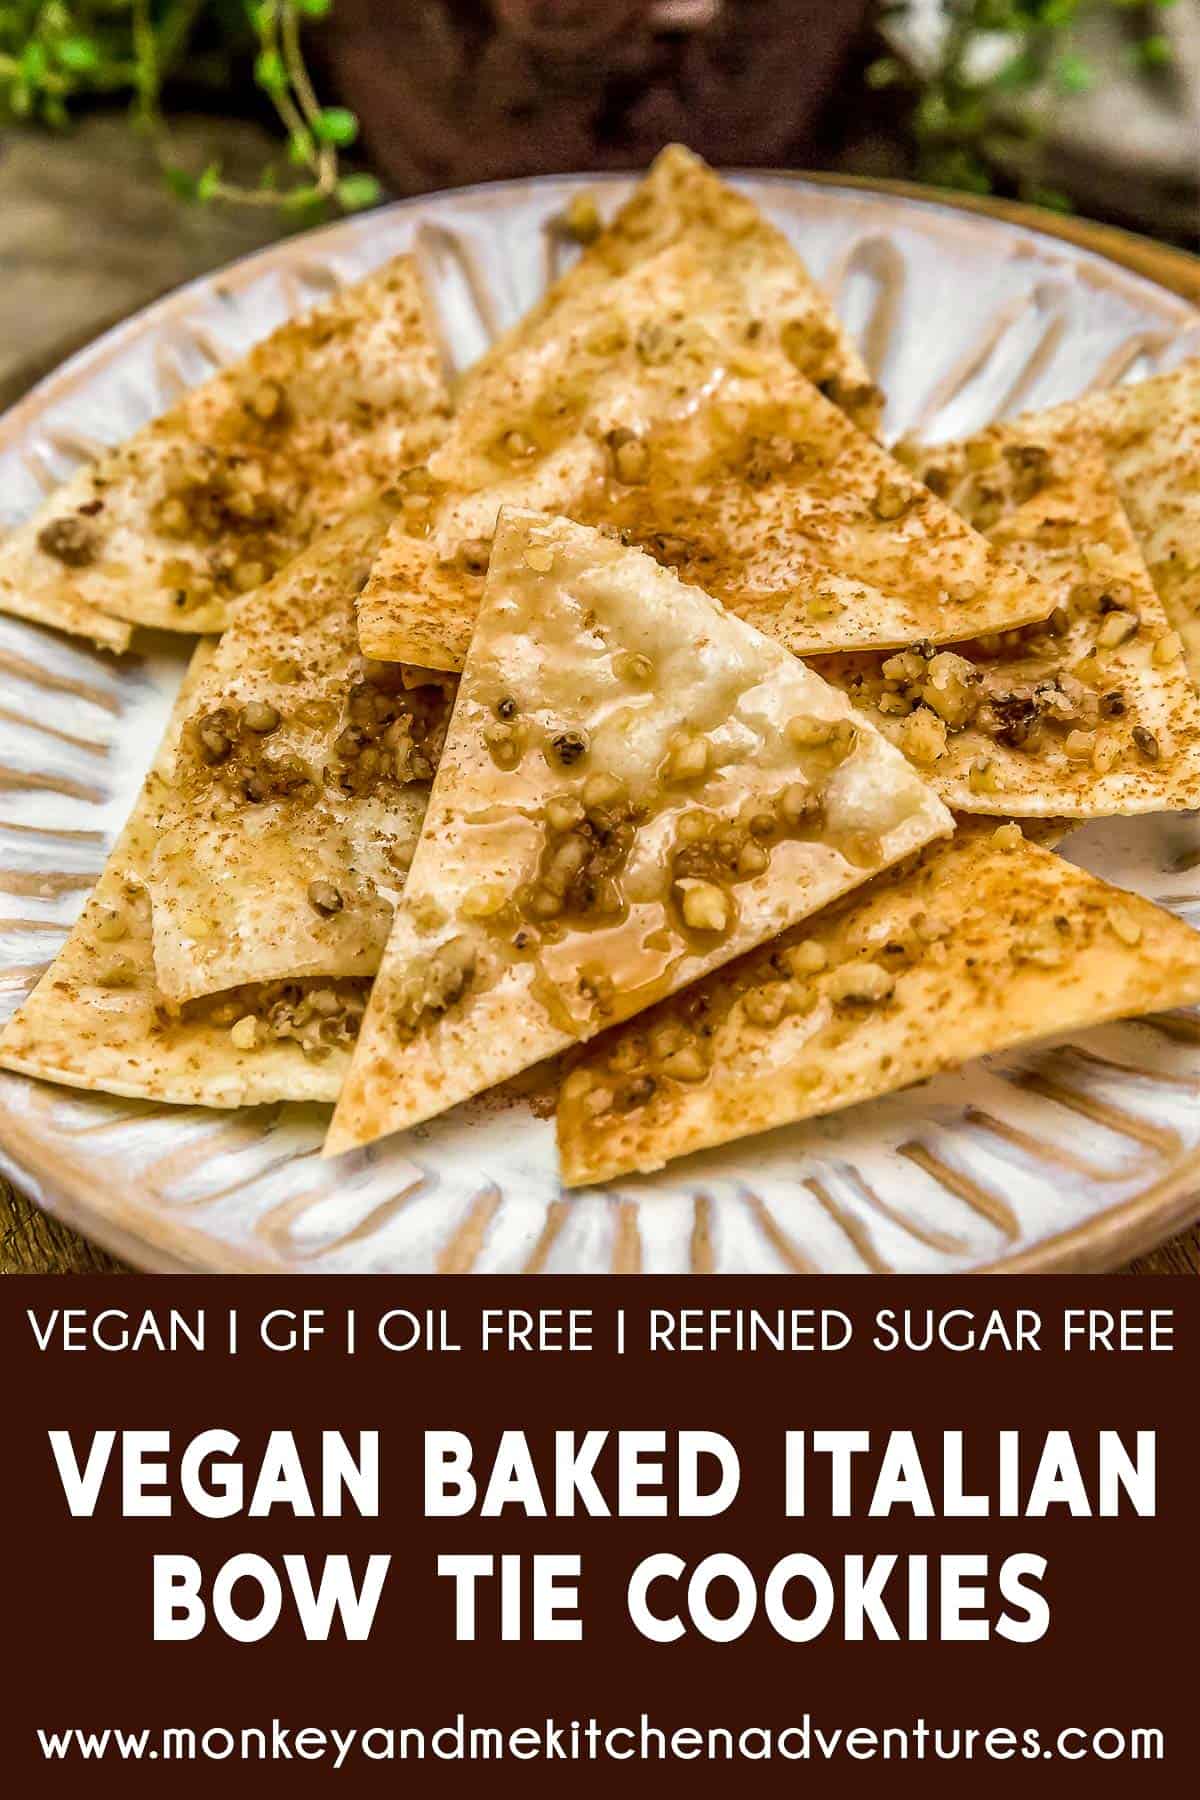 Vegan Baked Italian Bow Tie Cookies with text description